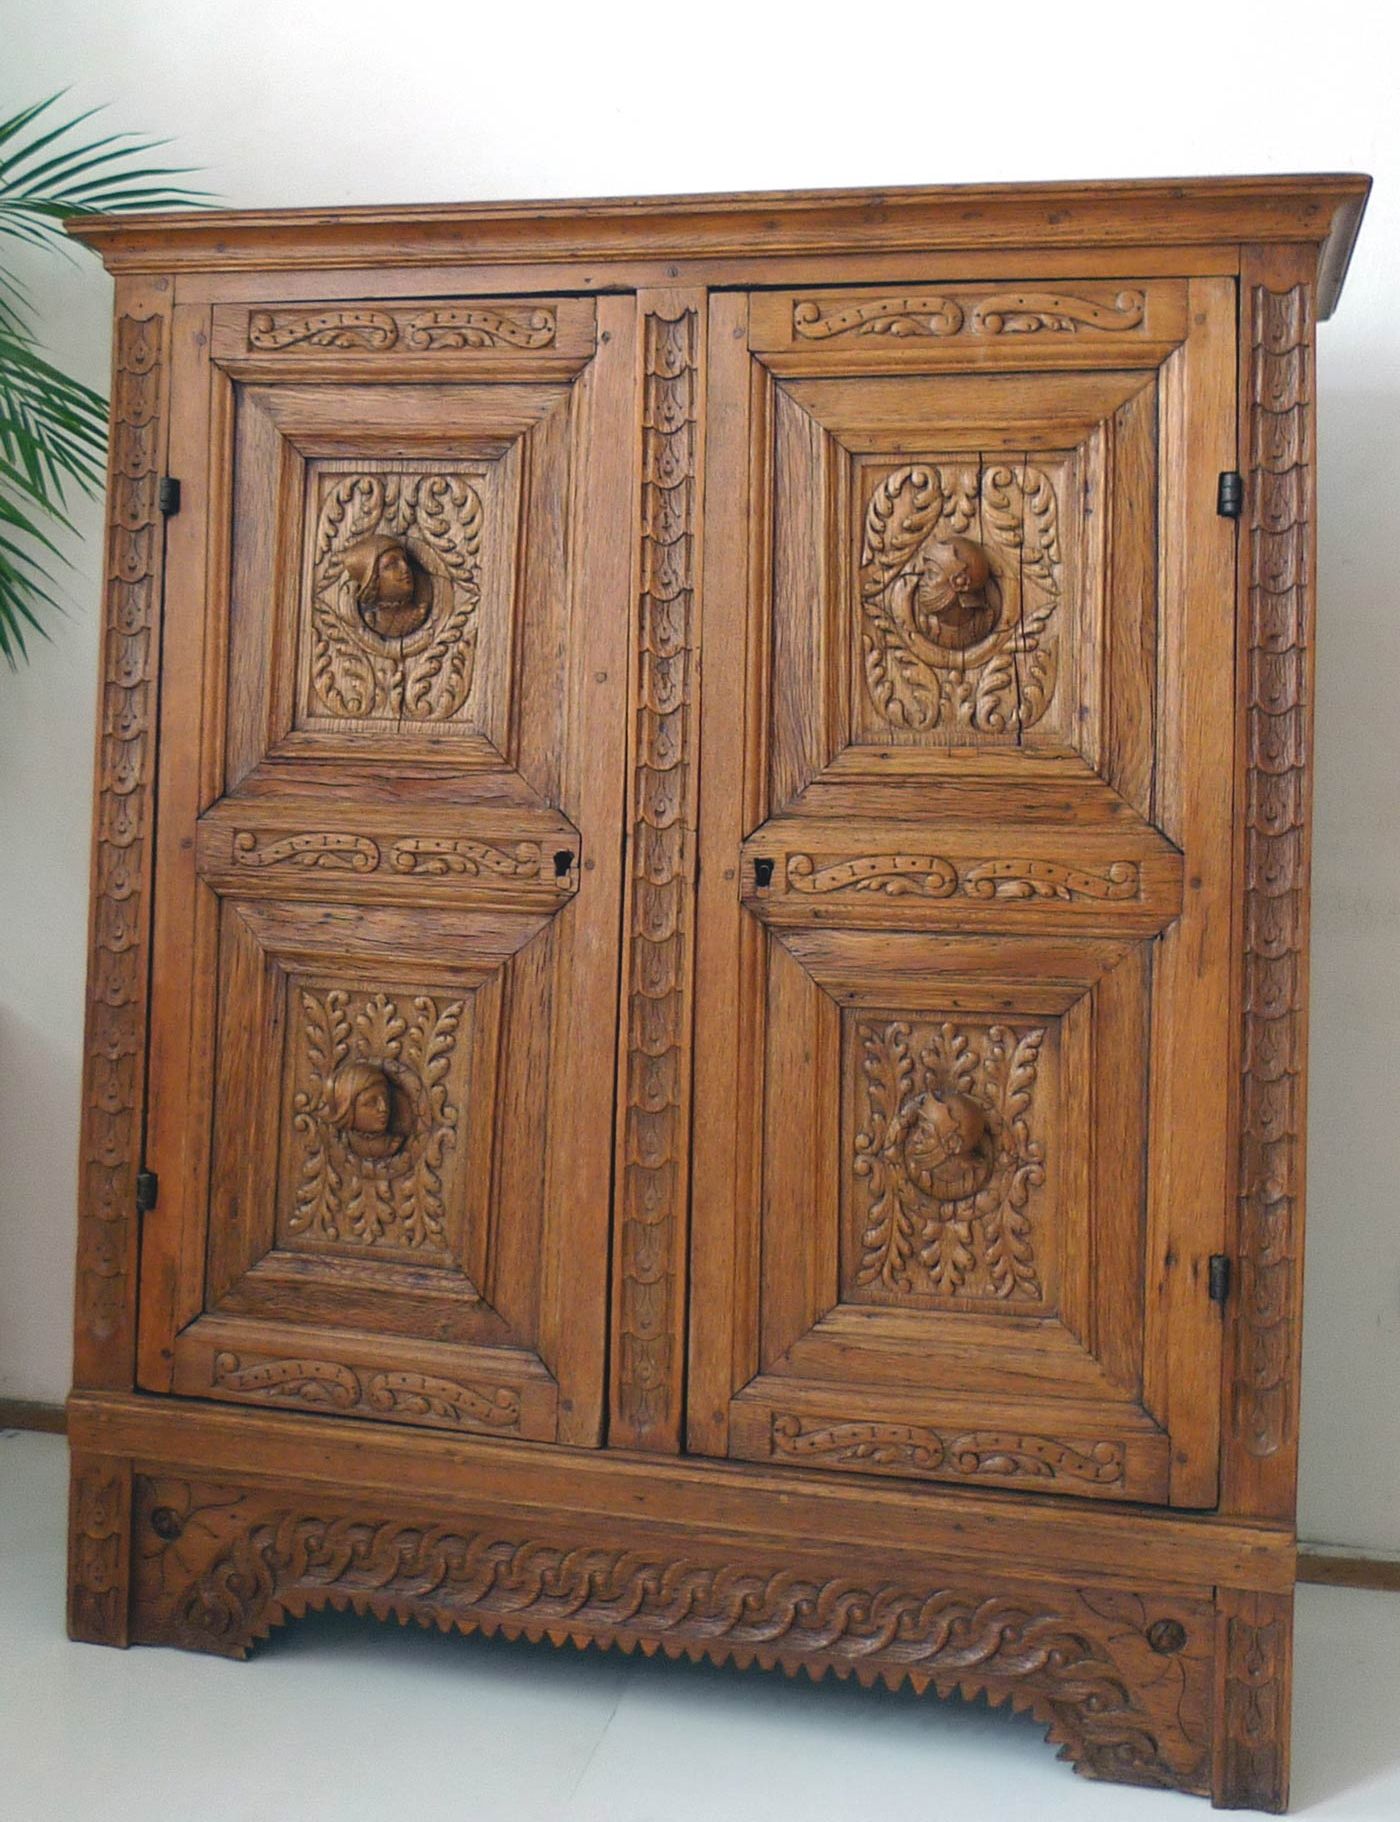 rare and beautiful original Flemish Renaissance Cabinet Schrank 1550